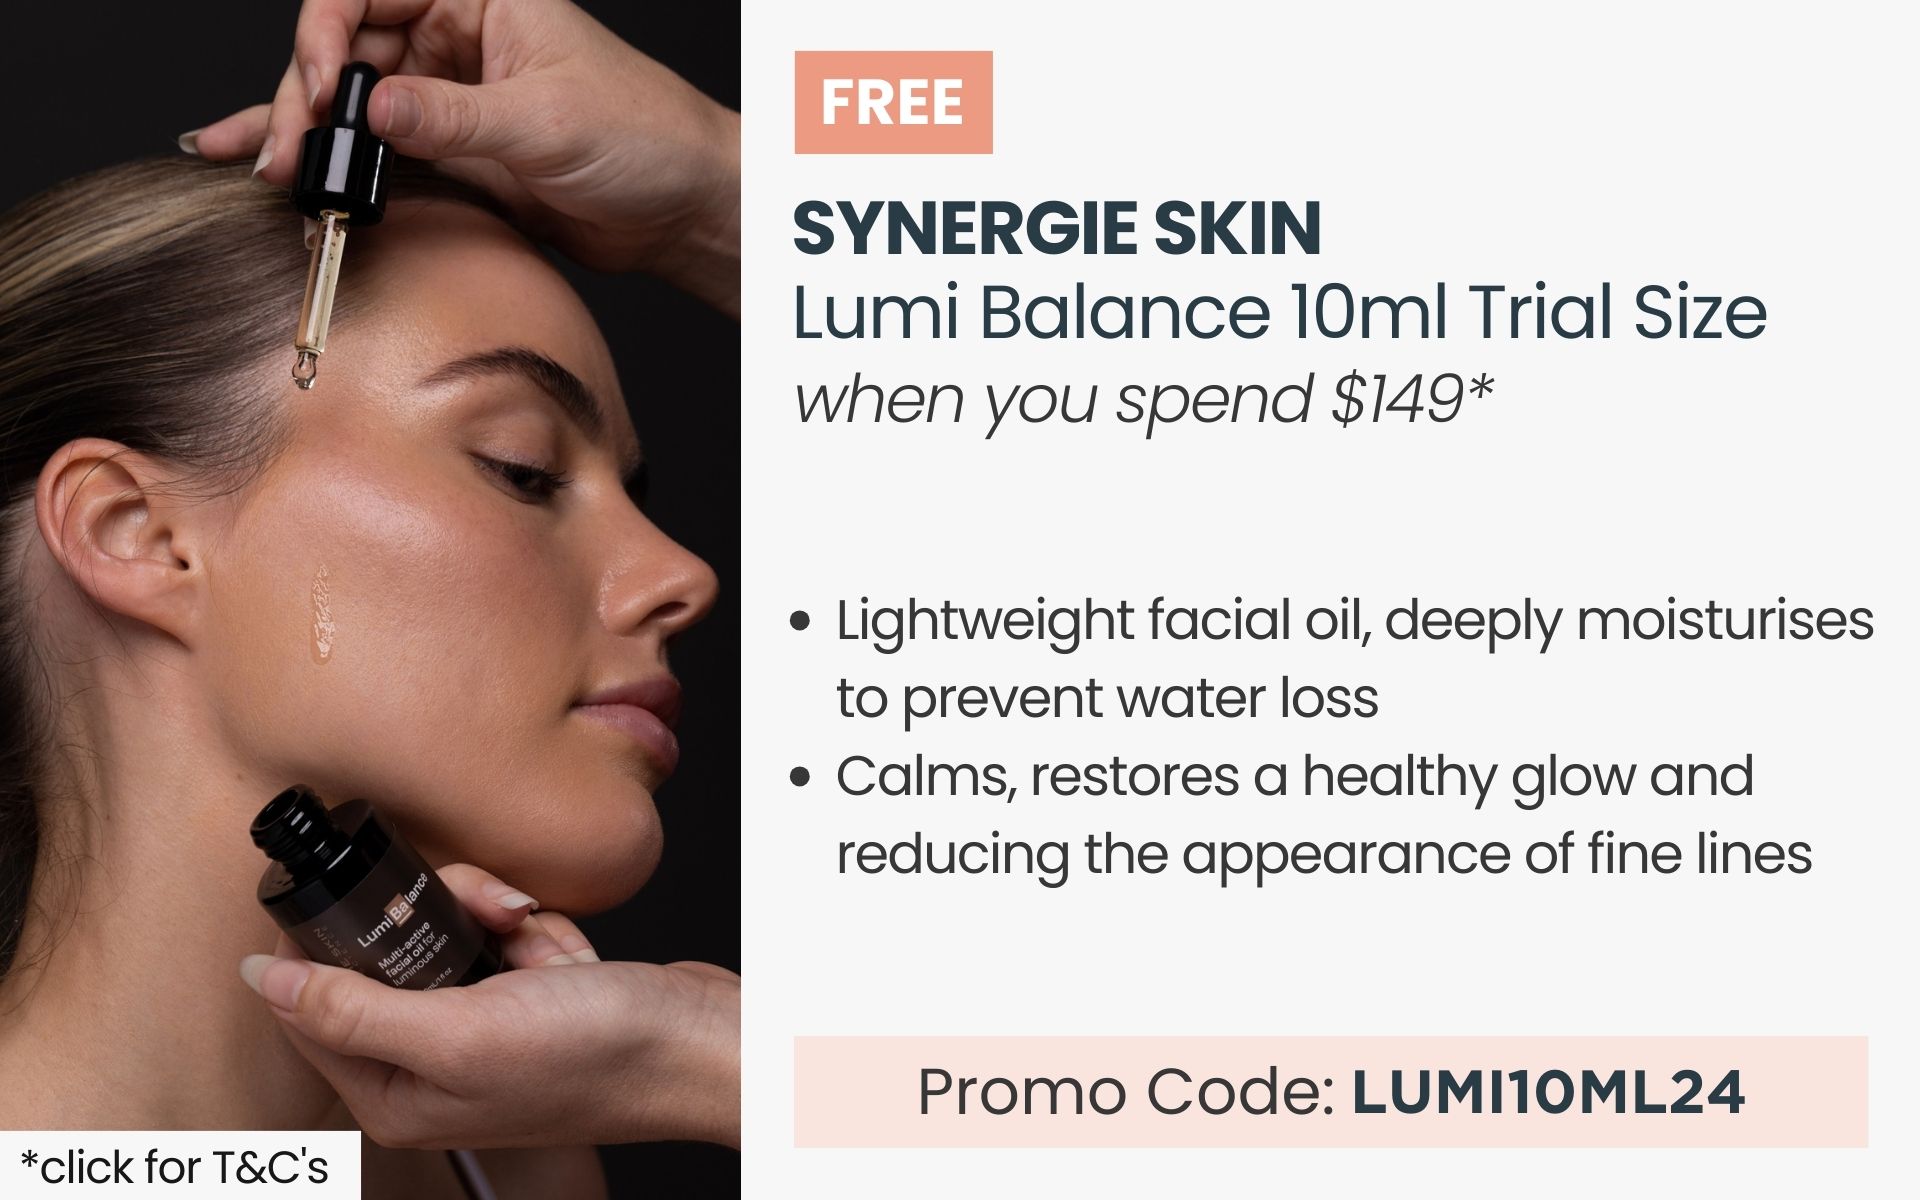 FREE Synergie Skin LumiBalance 10ml Travel Size. Min spend $149. Promo Code LUMI10ML24